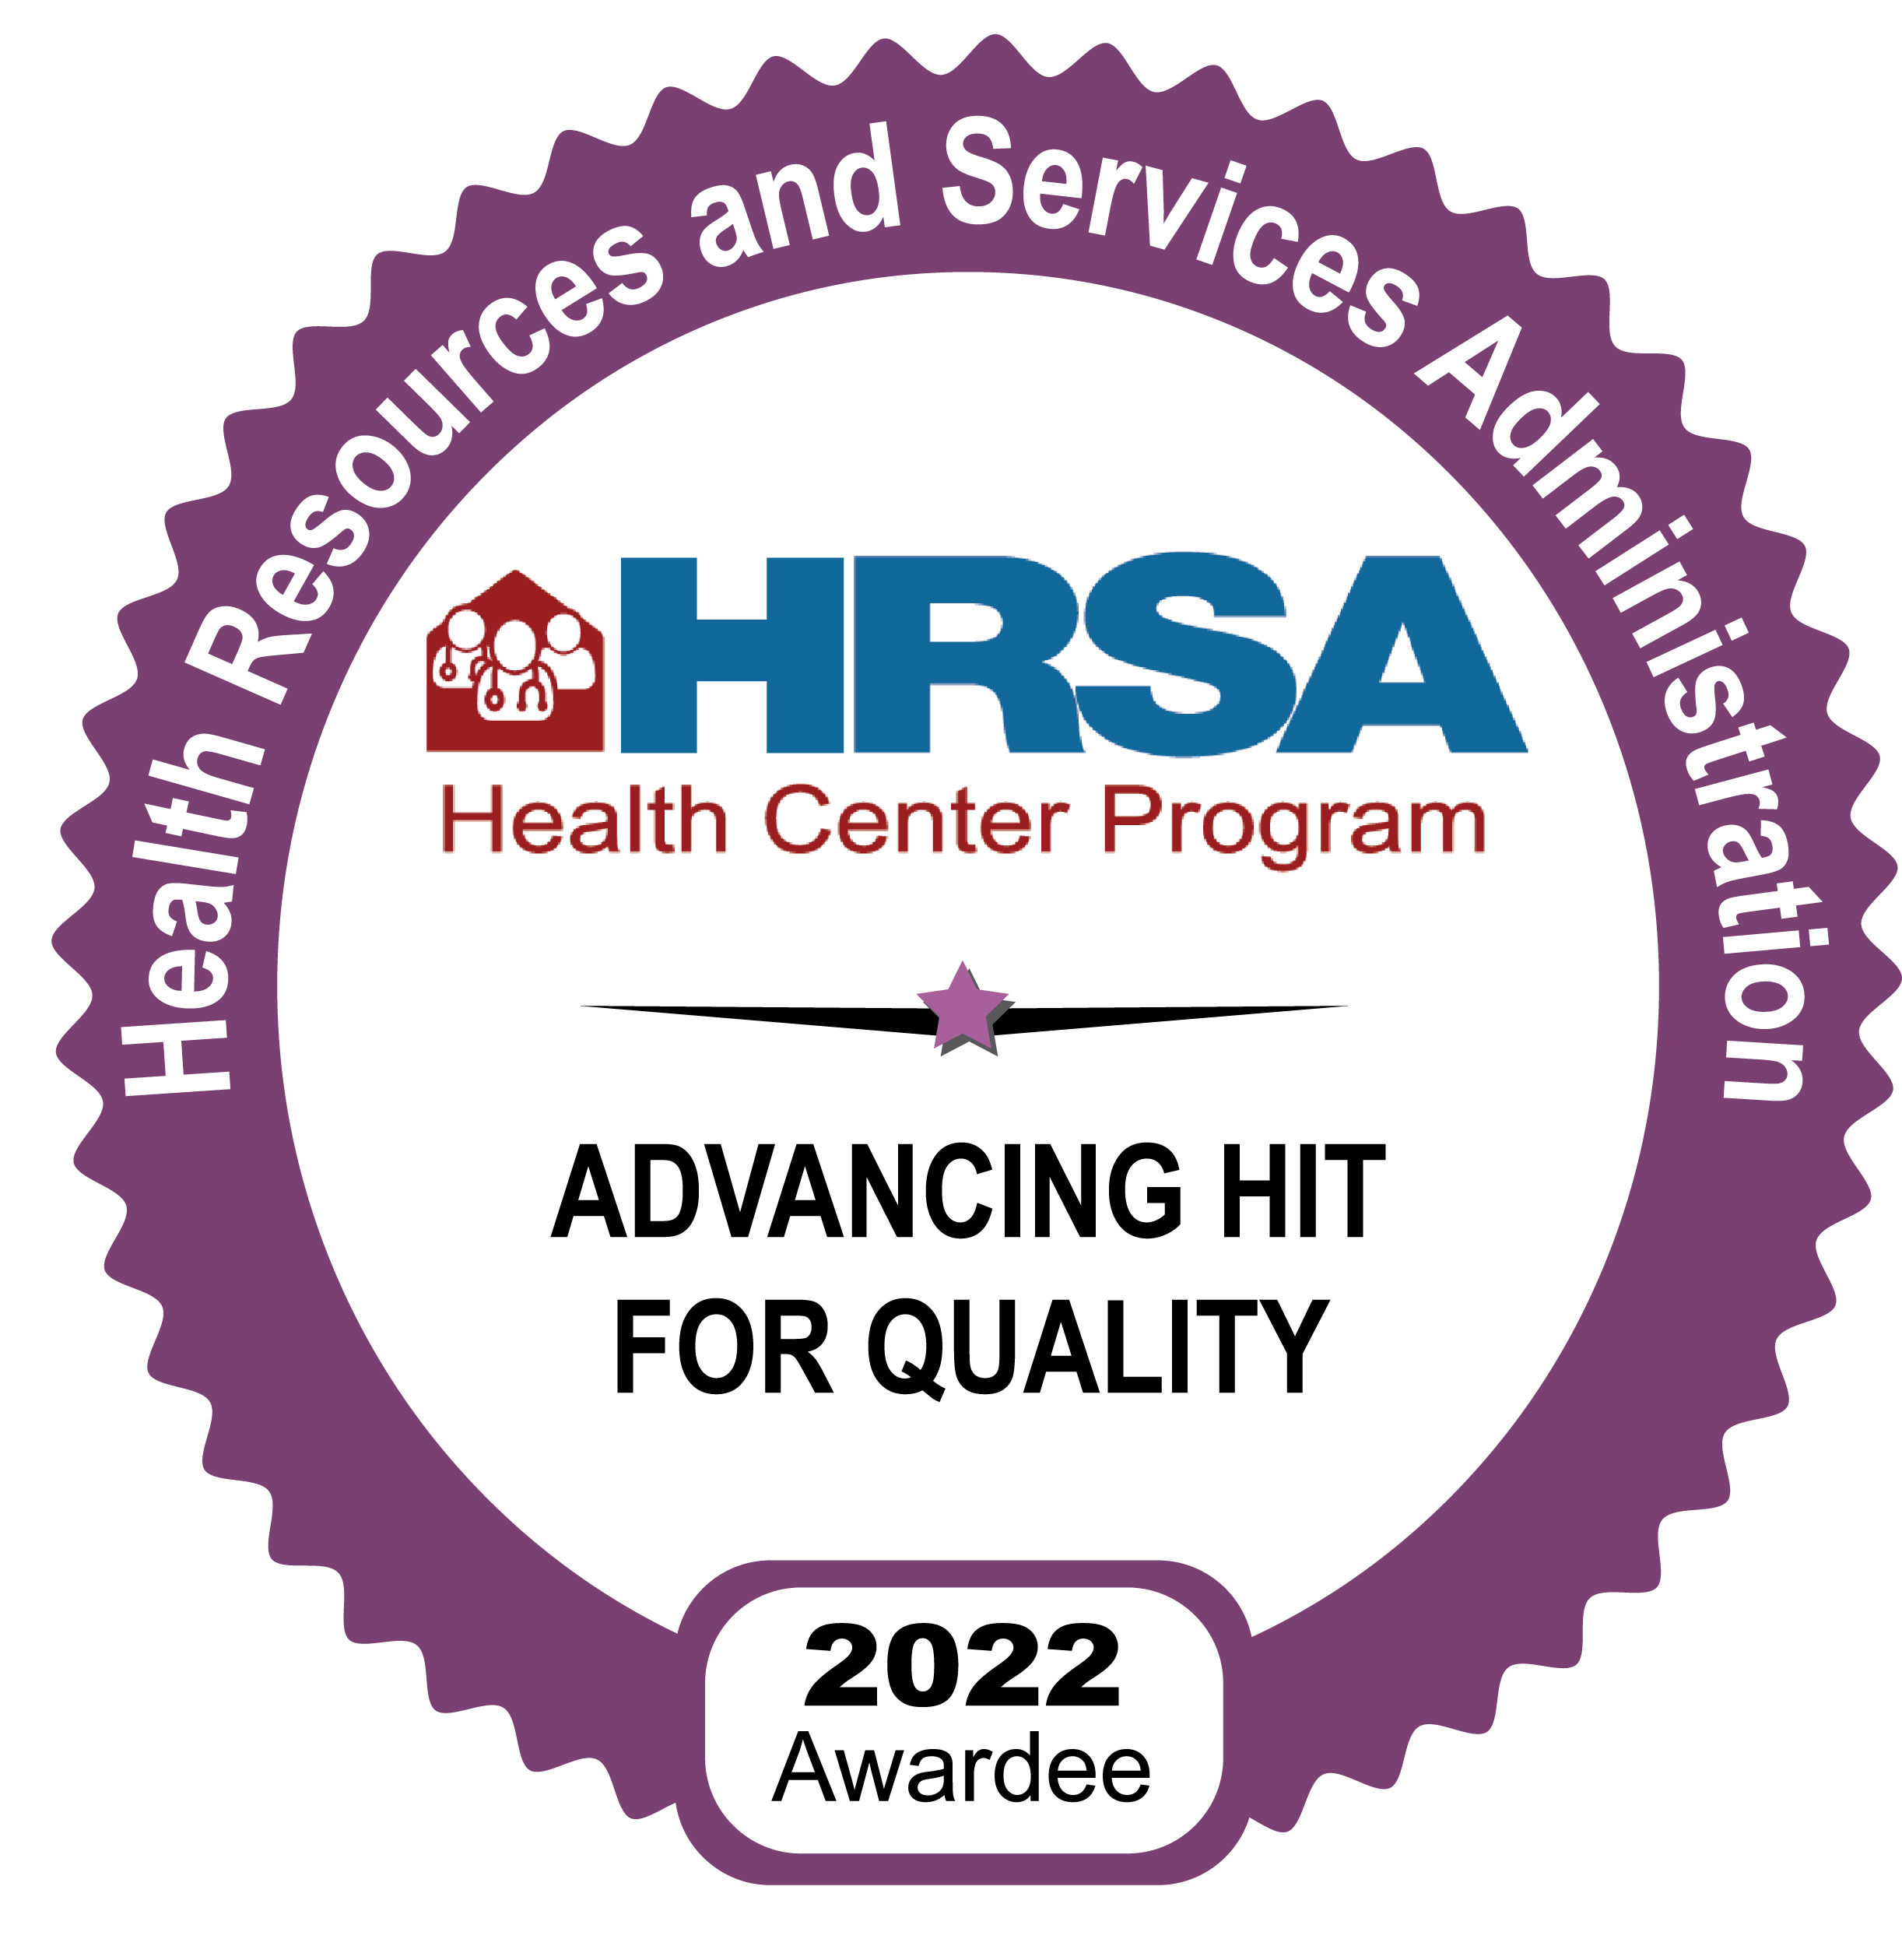 HRSA Health Center Program